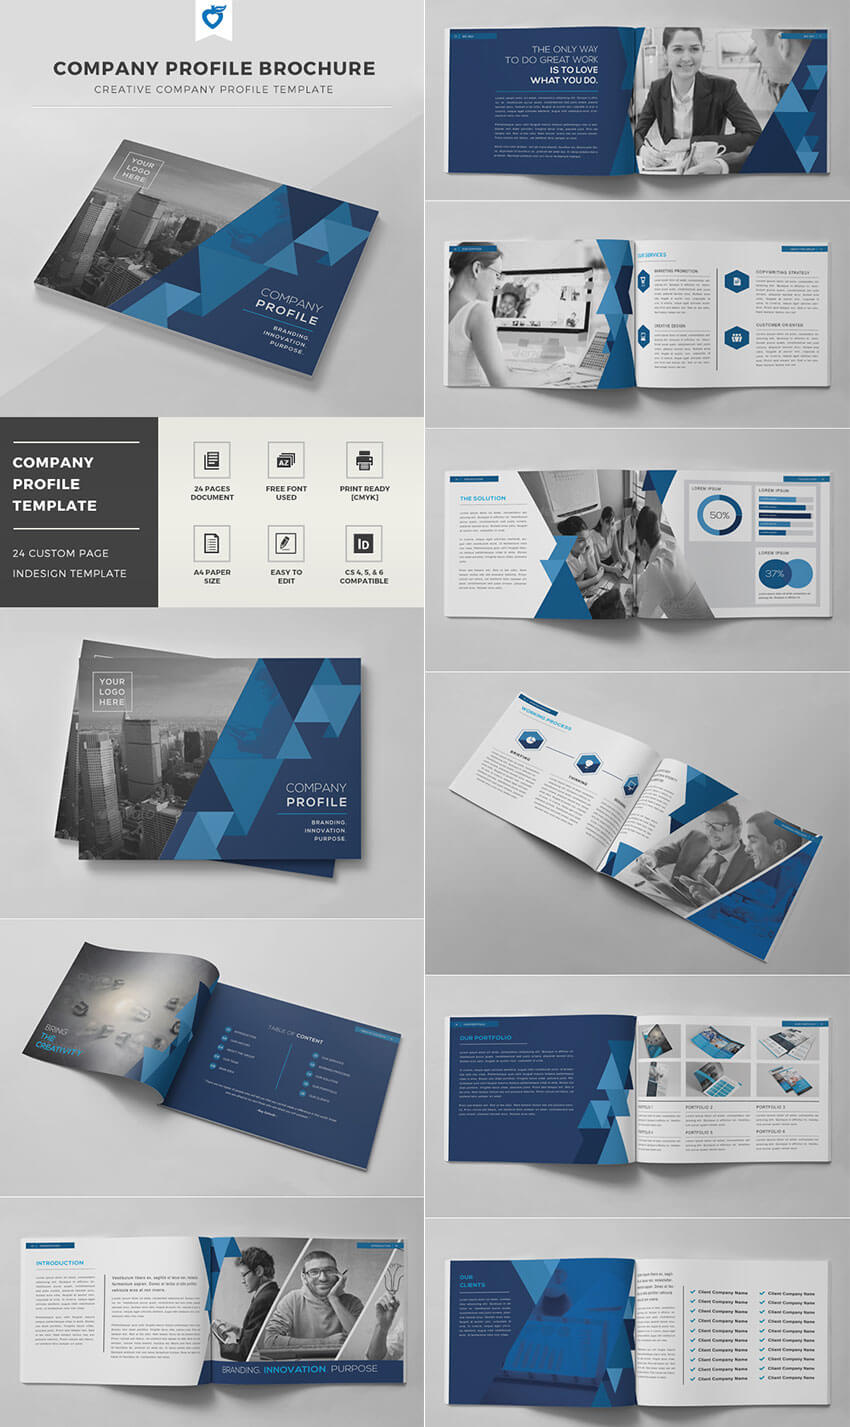 30 Best Indesign Brochure Templates – Creative Business In Adobe Indesign Brochure Templates